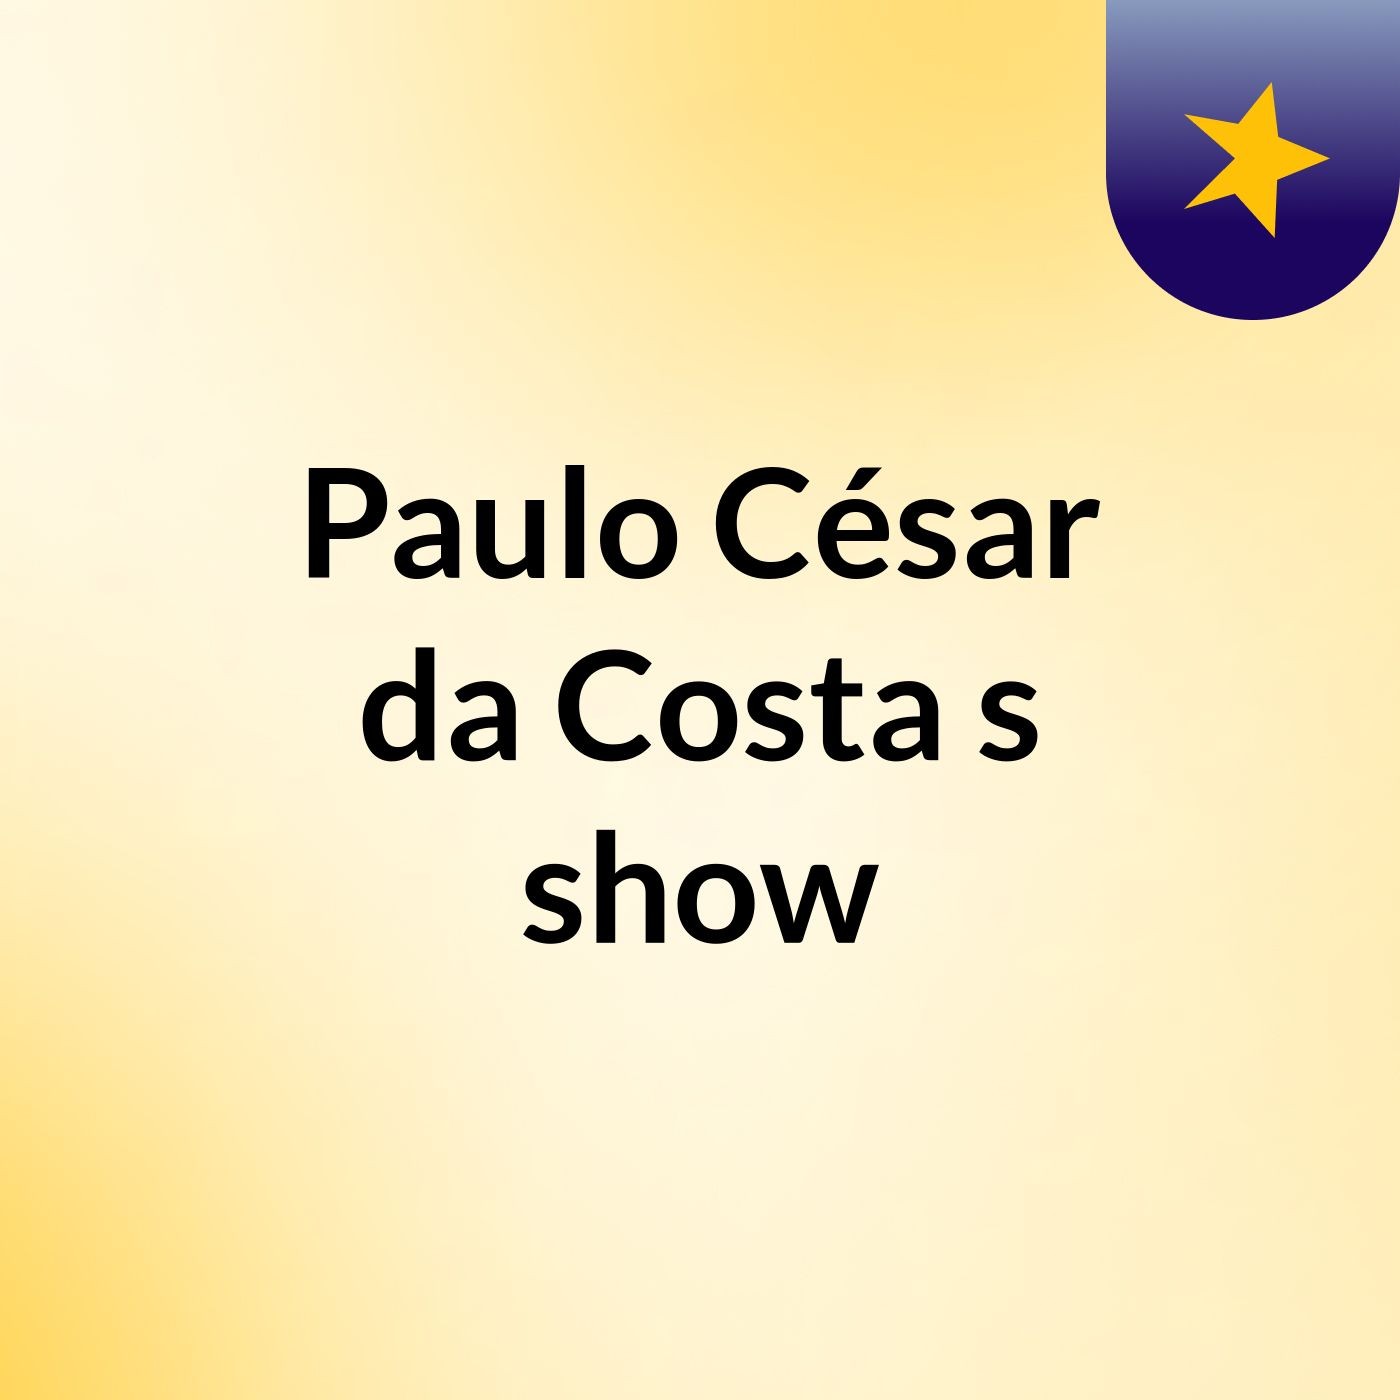 Paulo César da Costa's show